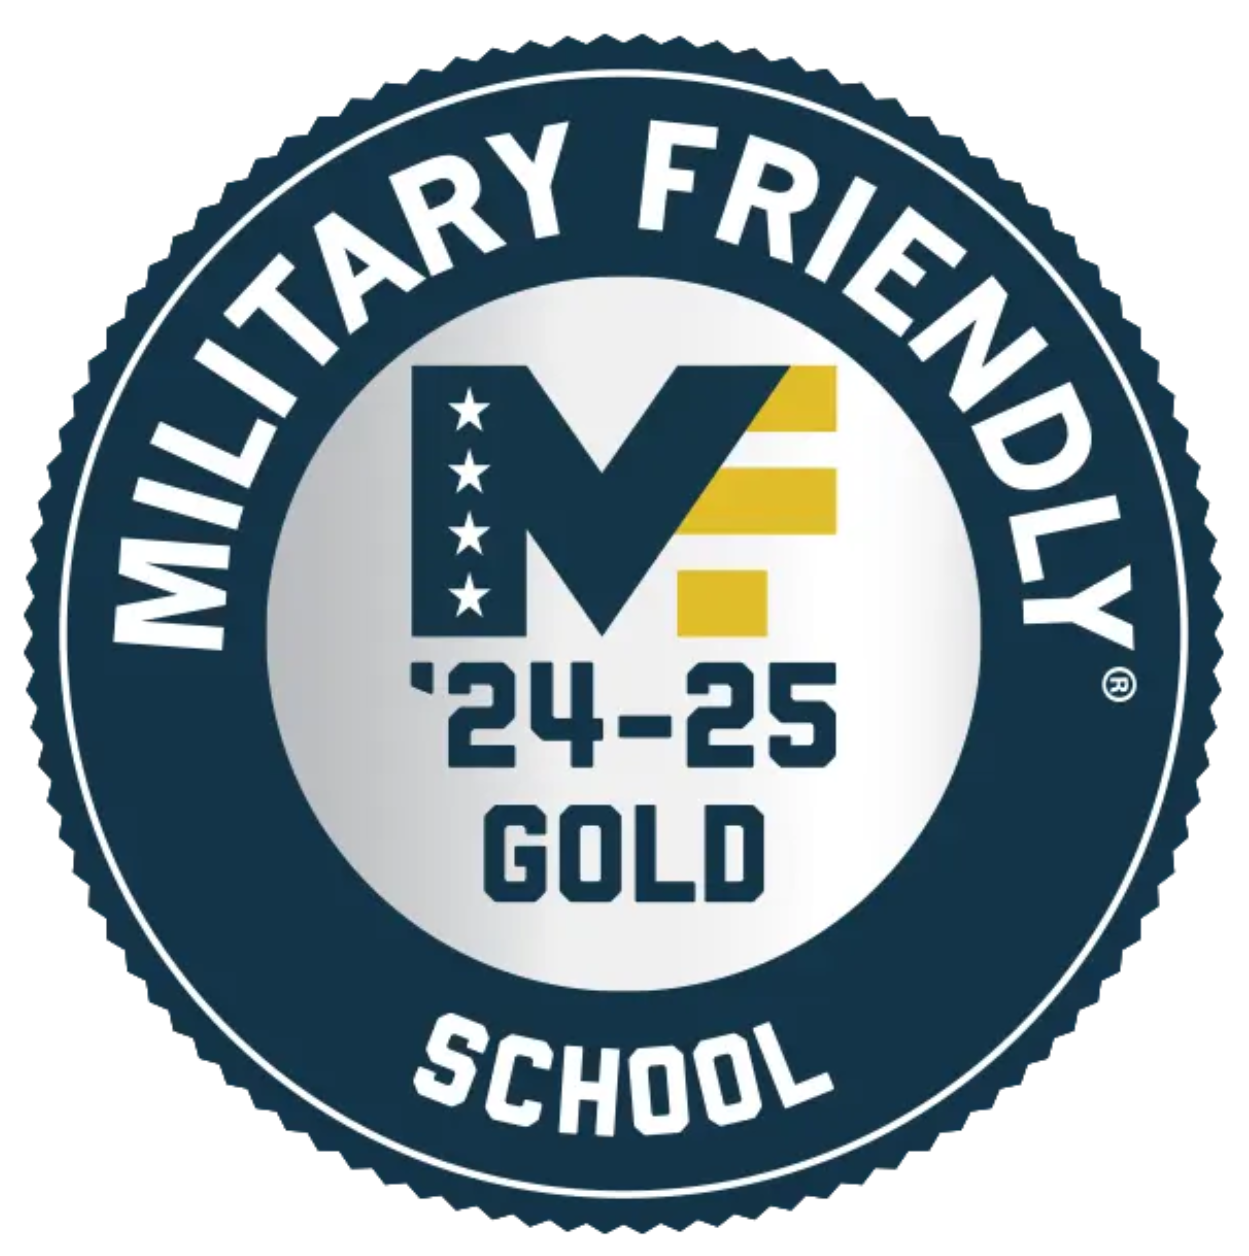 Military School Gold 